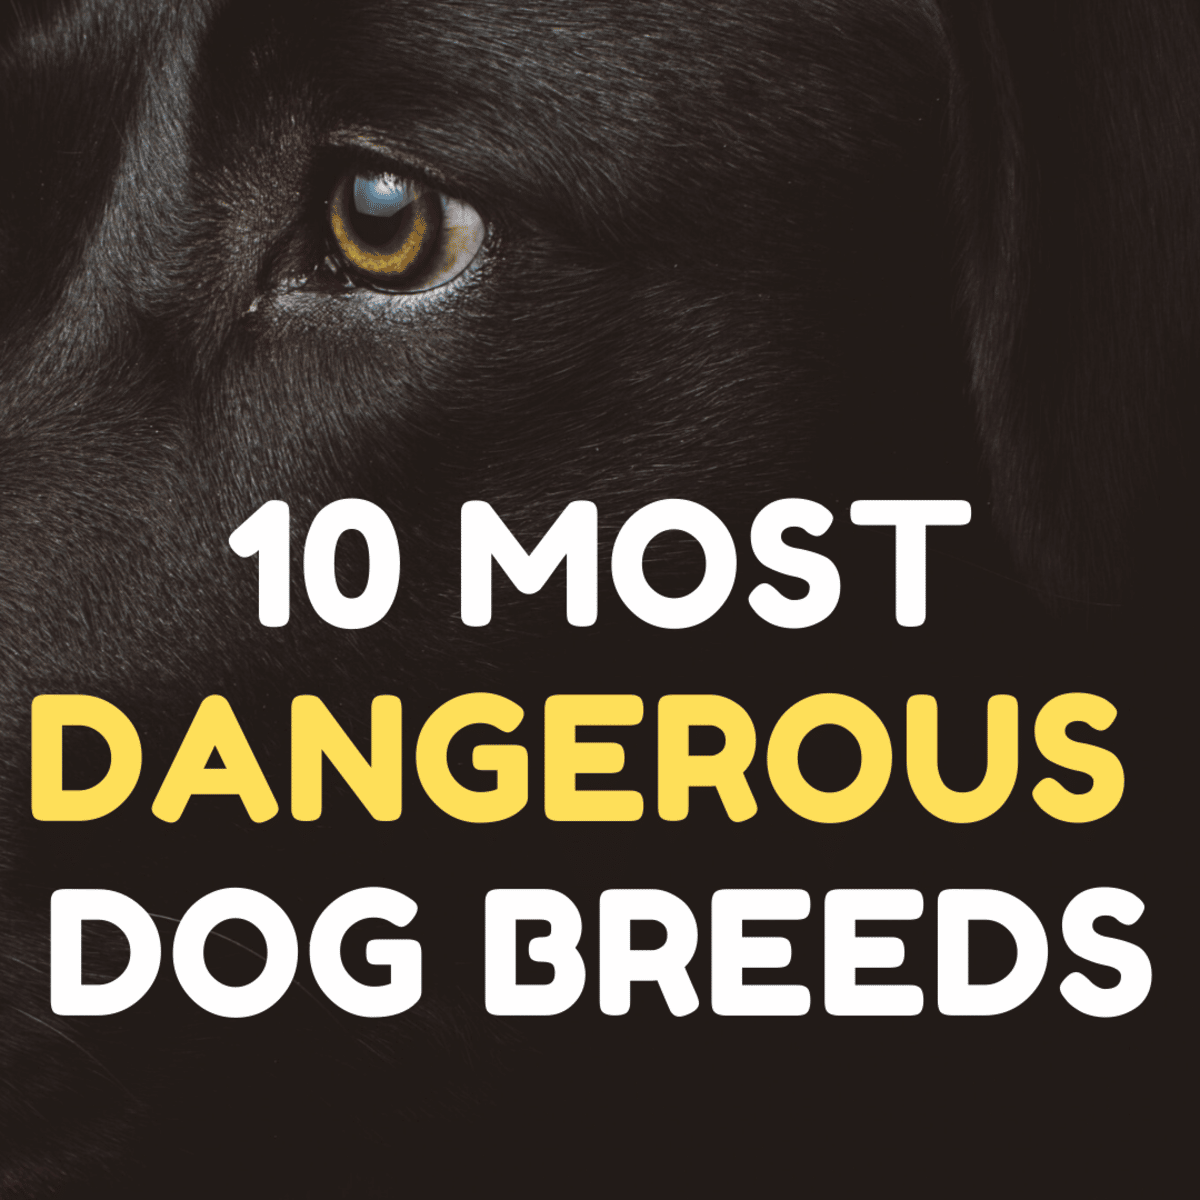 Most Dangerous Dog Breeds: Dog Bite and Attack Statistics